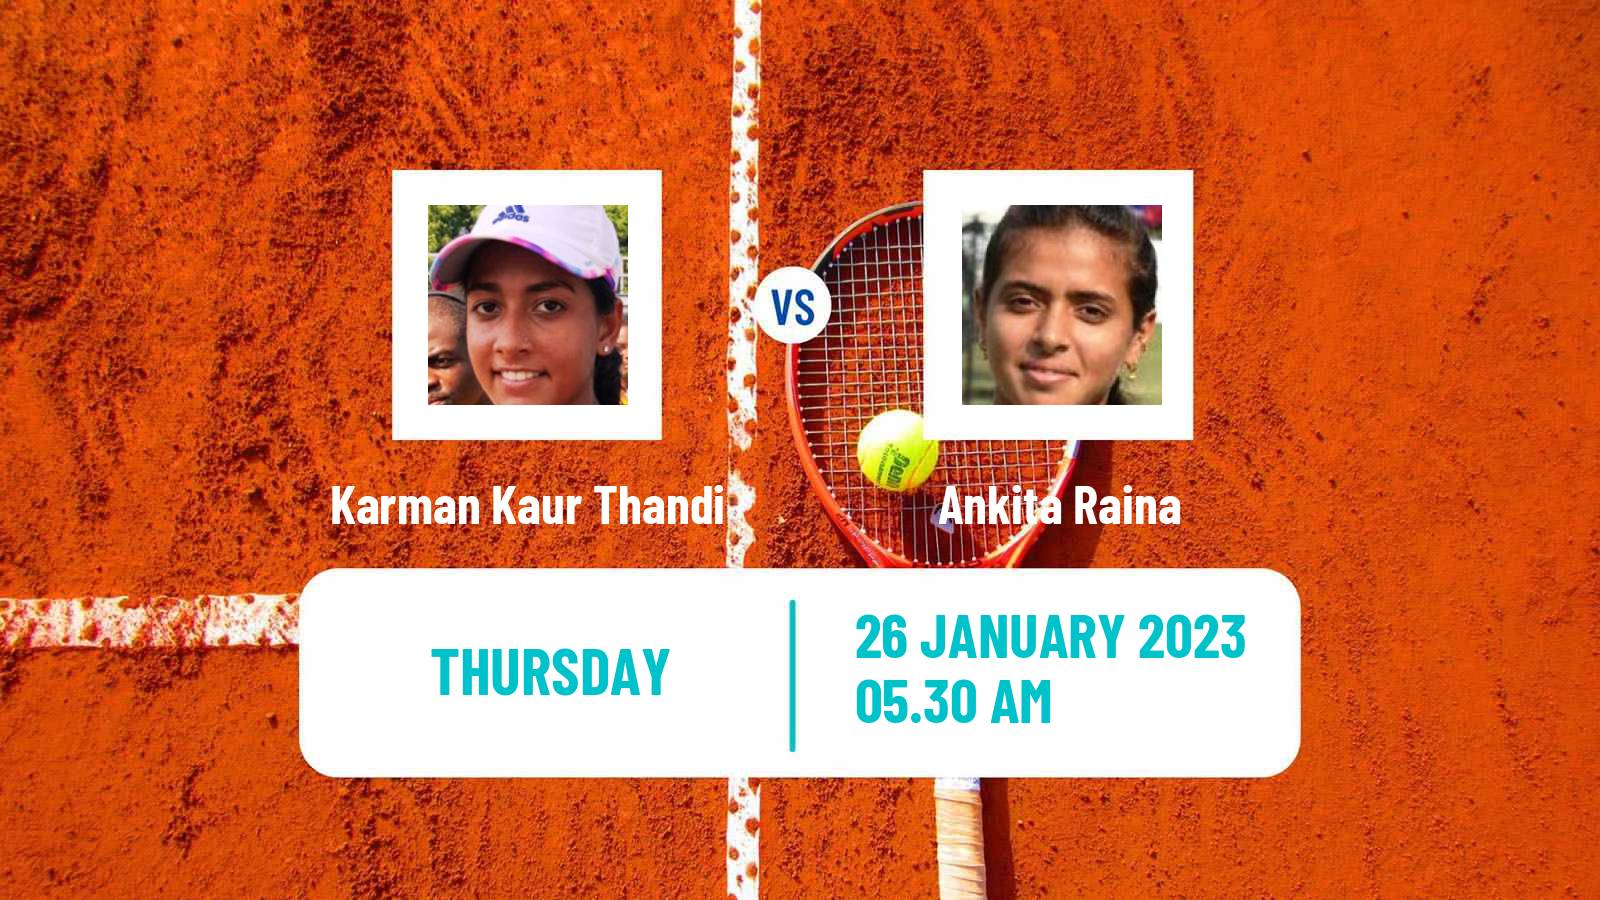 Tennis ITF Tournaments Karman Kaur Thandi - Ankita Raina